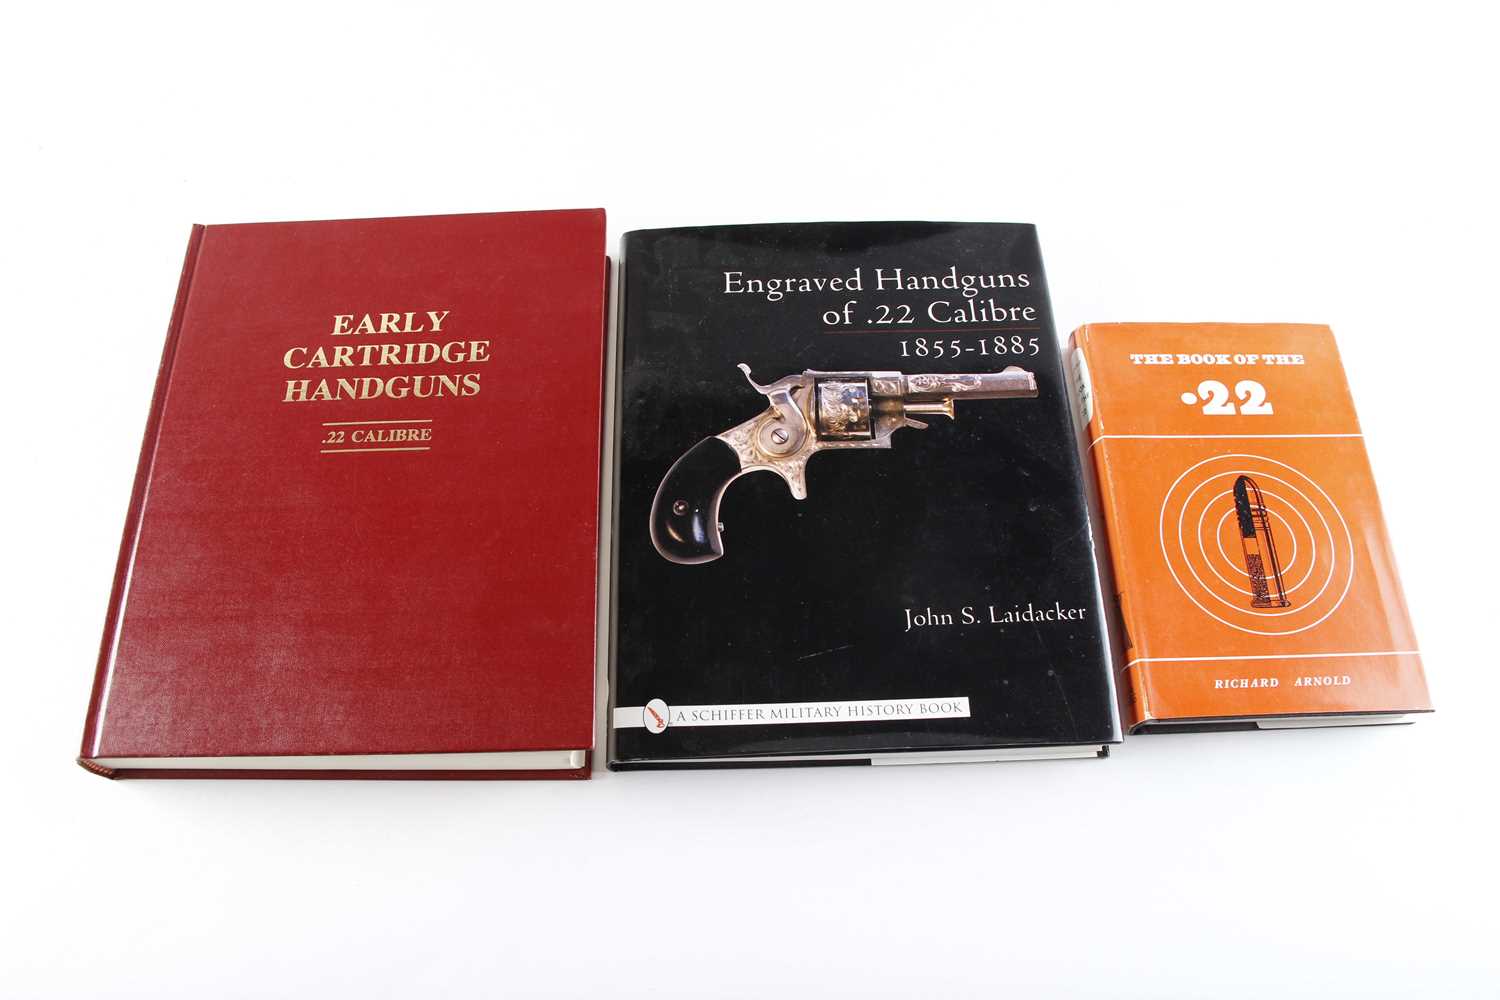 3 Vols: Early Cartridge Handguns, .22 Calibre; Engraved Handguns of .22 Calibre 1855 - 1885 by by